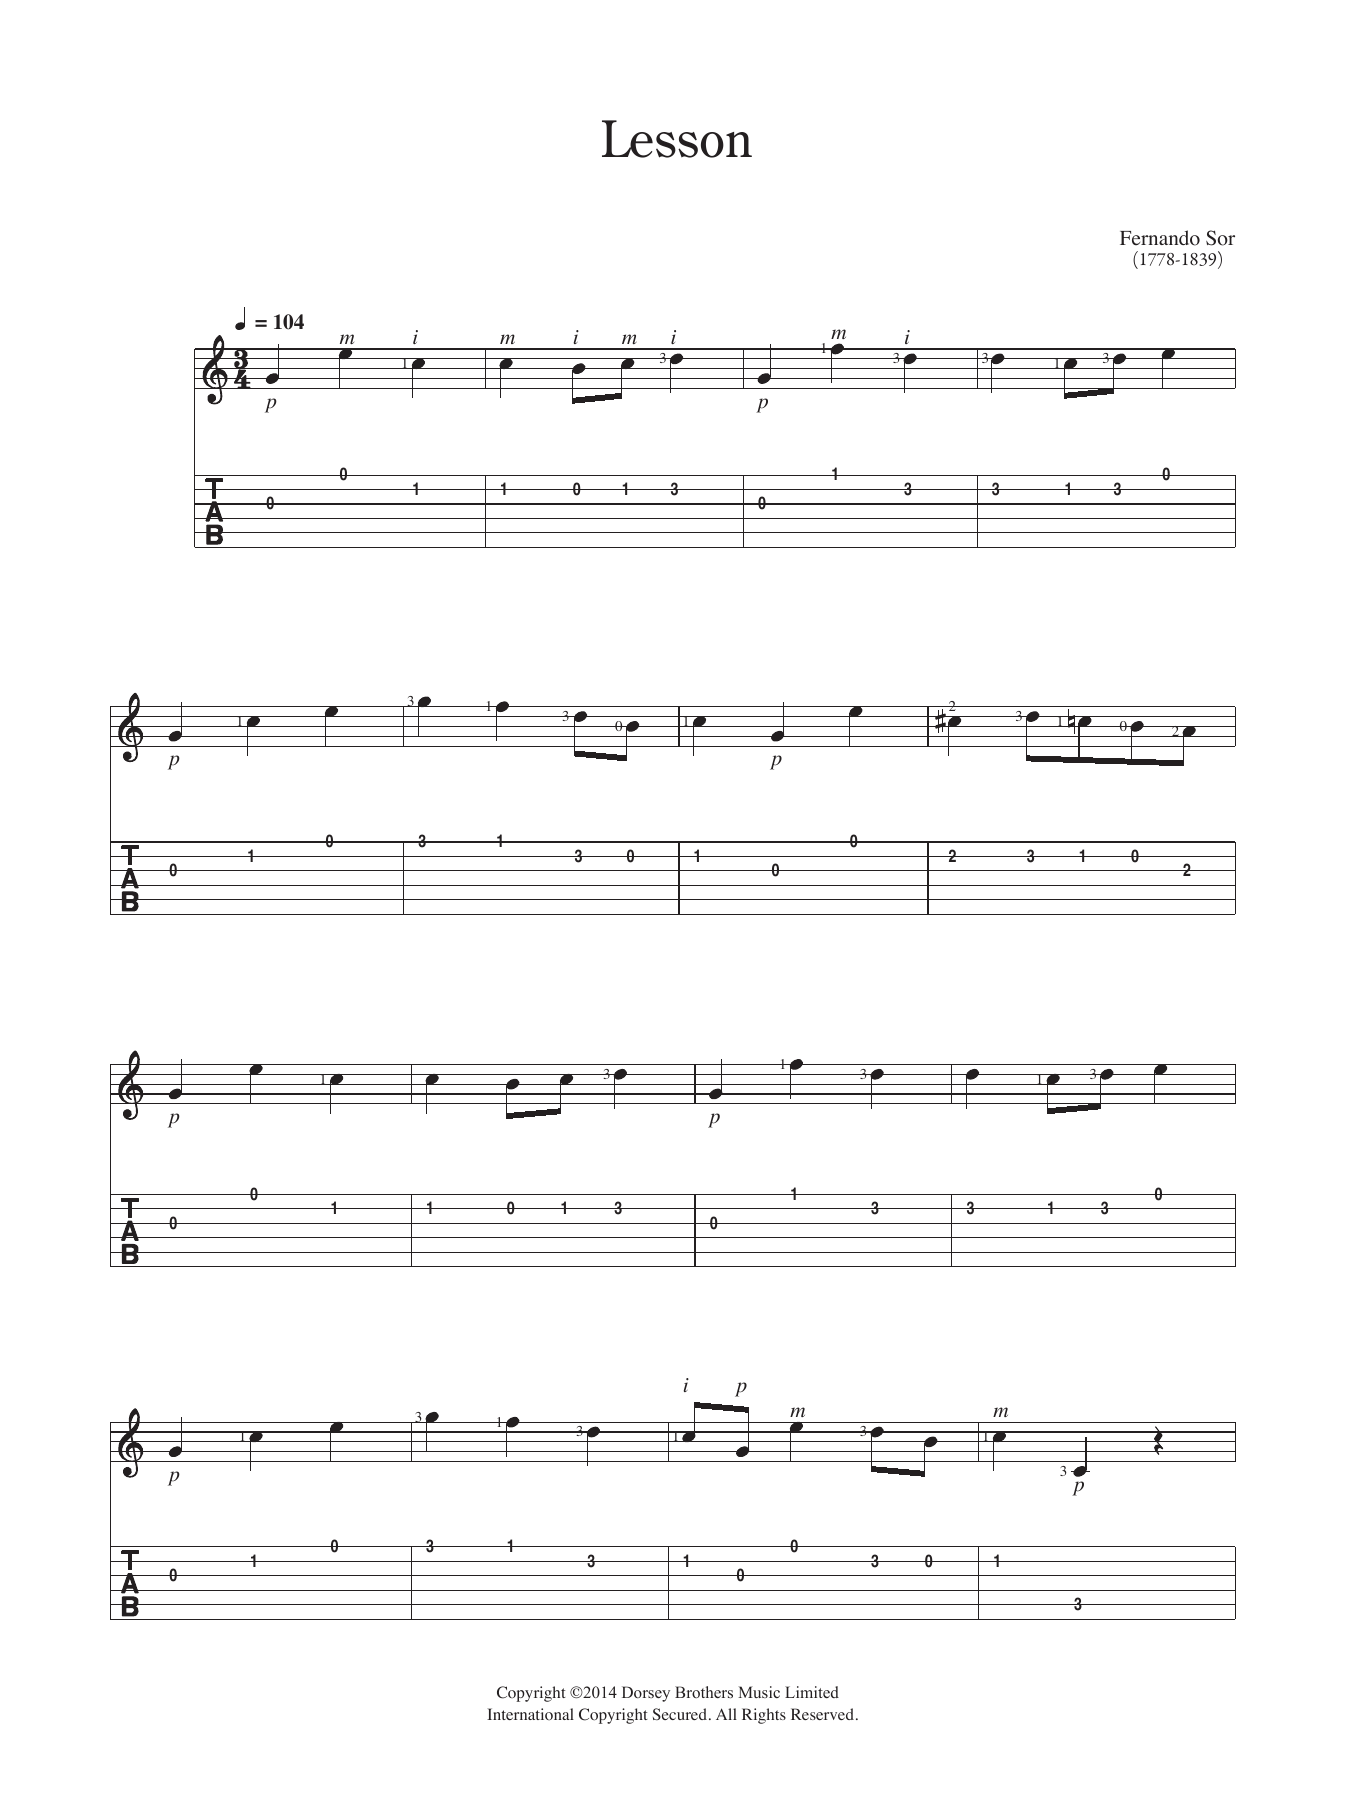 Fernando Sor Lesson Sheet Music Notes & Chords for Guitar - Download or Print PDF